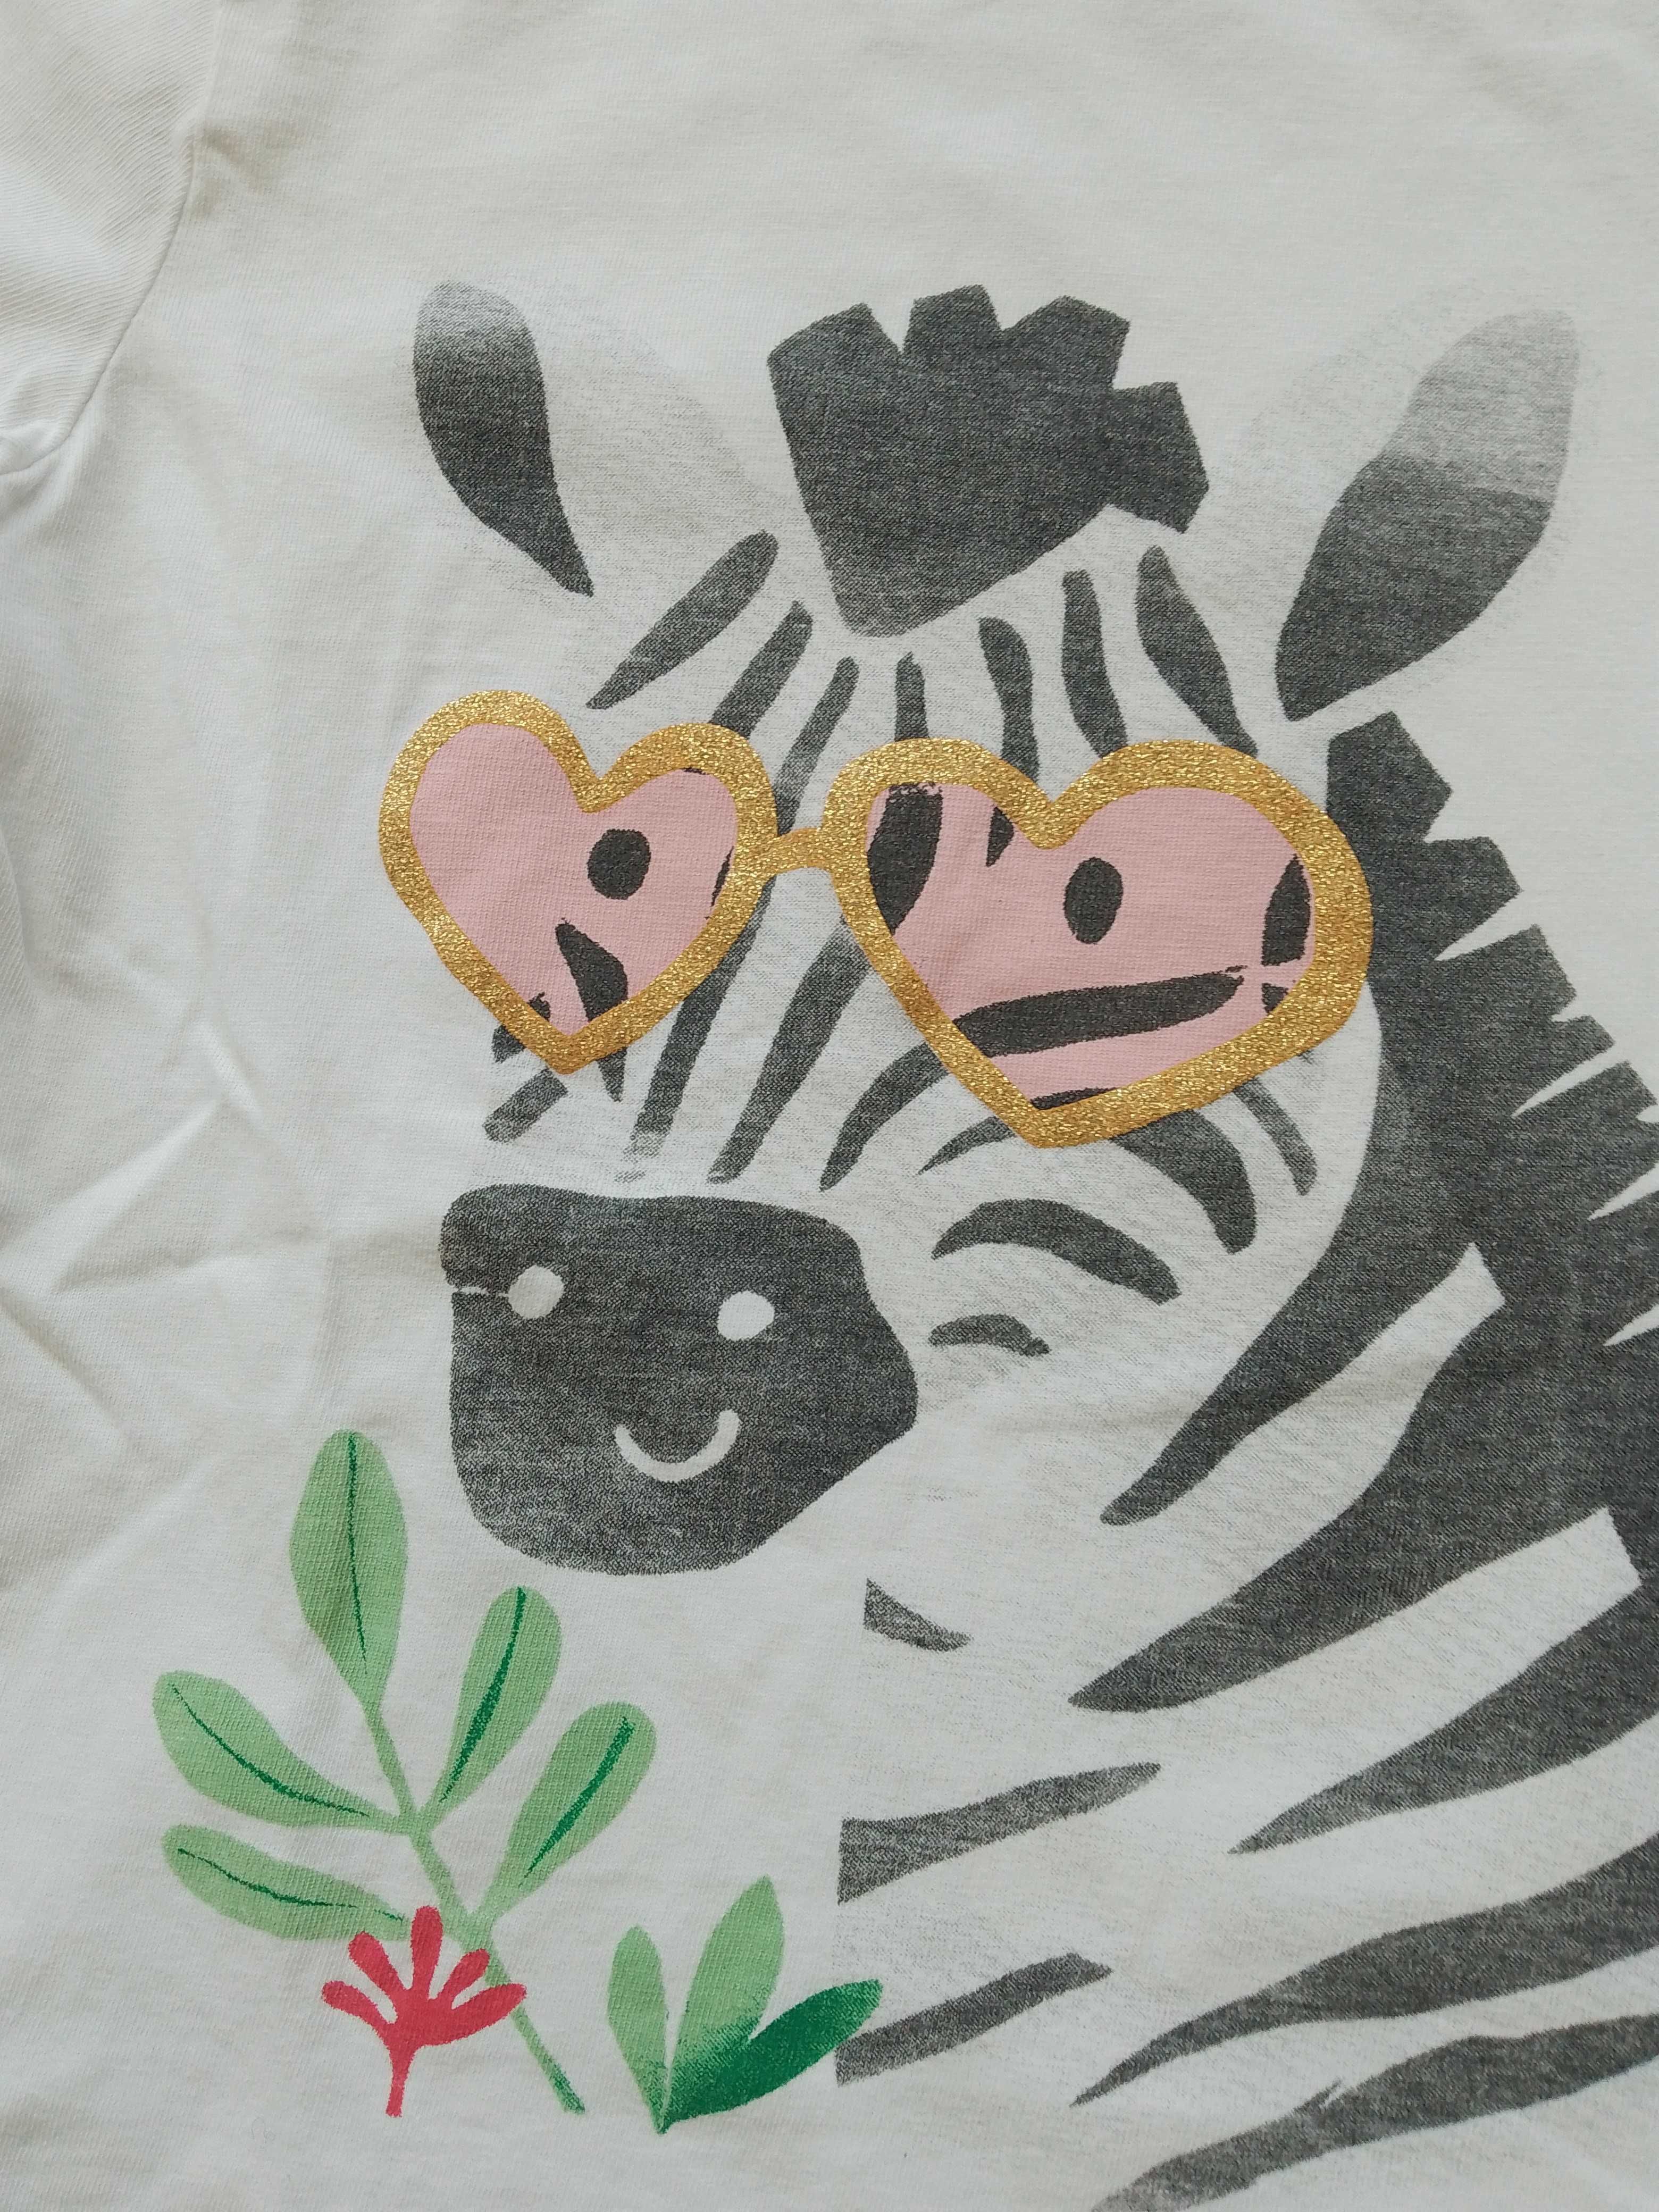 T-shirt z zebrą 5 10 15